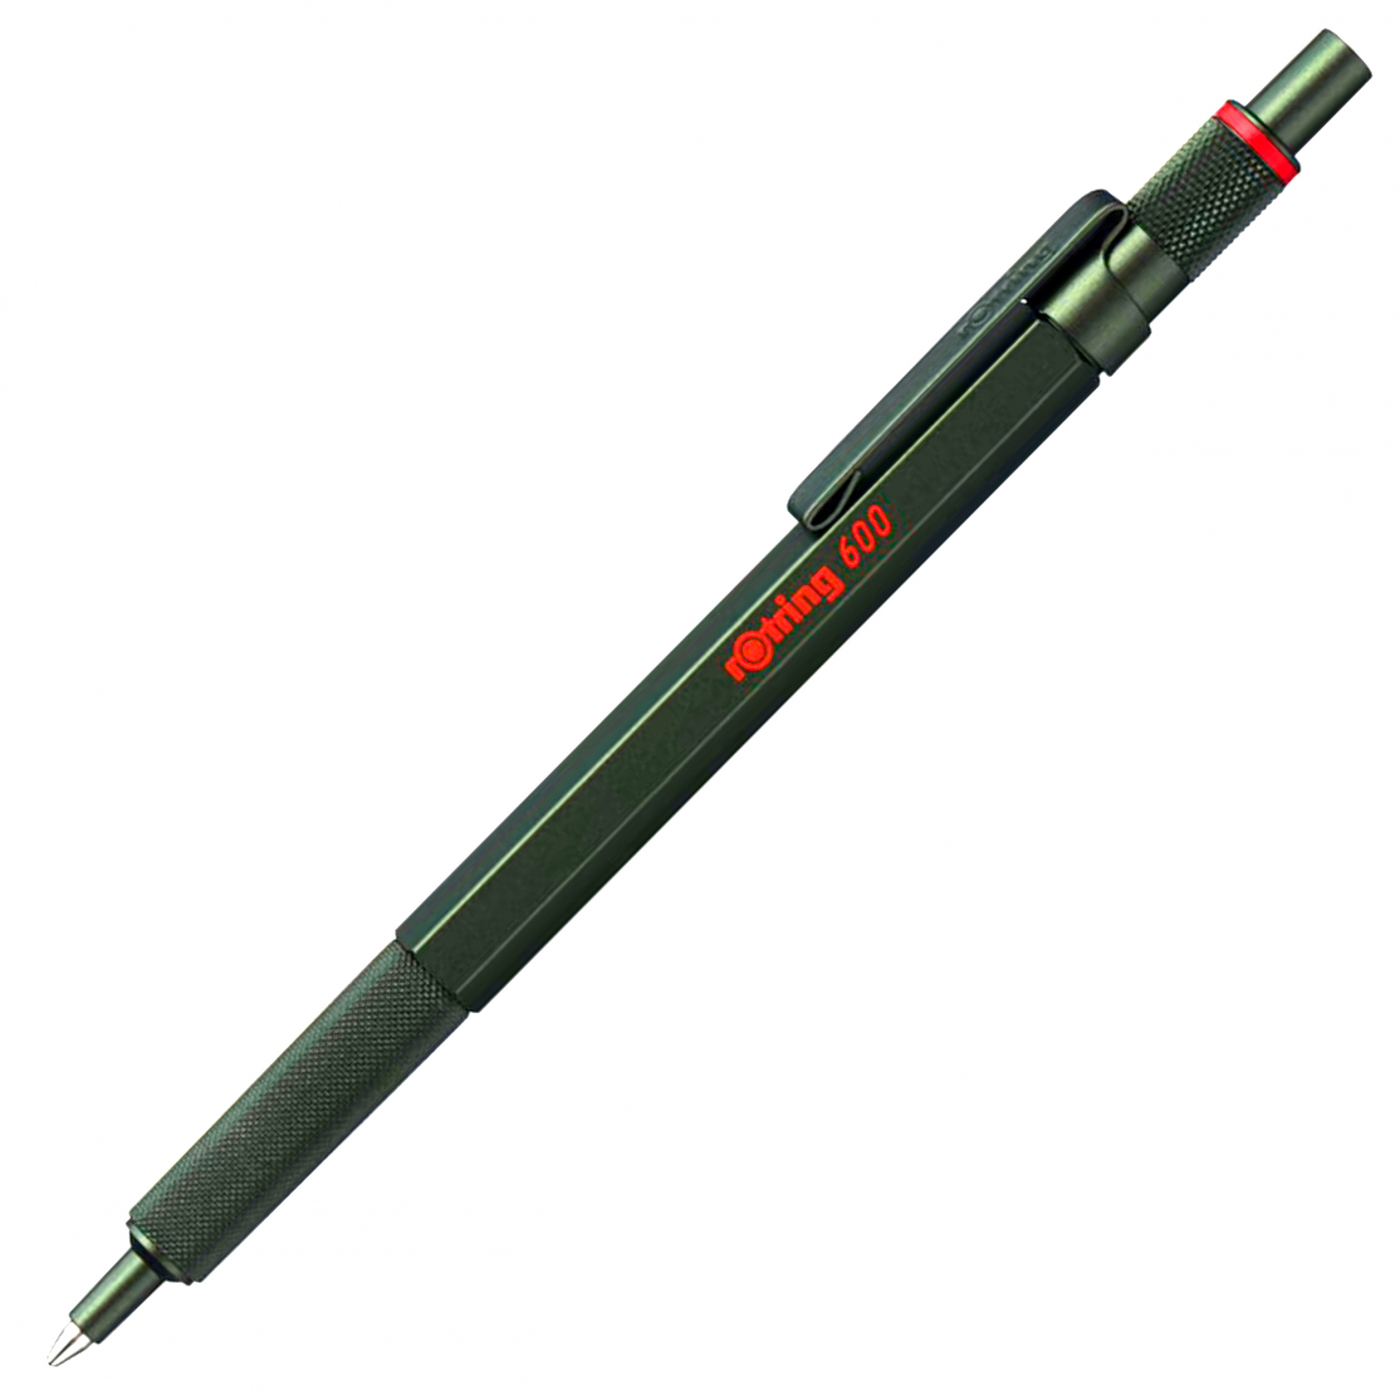 600 Ballpoint Pen Green in the group Pens / Fine Writing / Ballpoint Pens at Pen Store (111726)